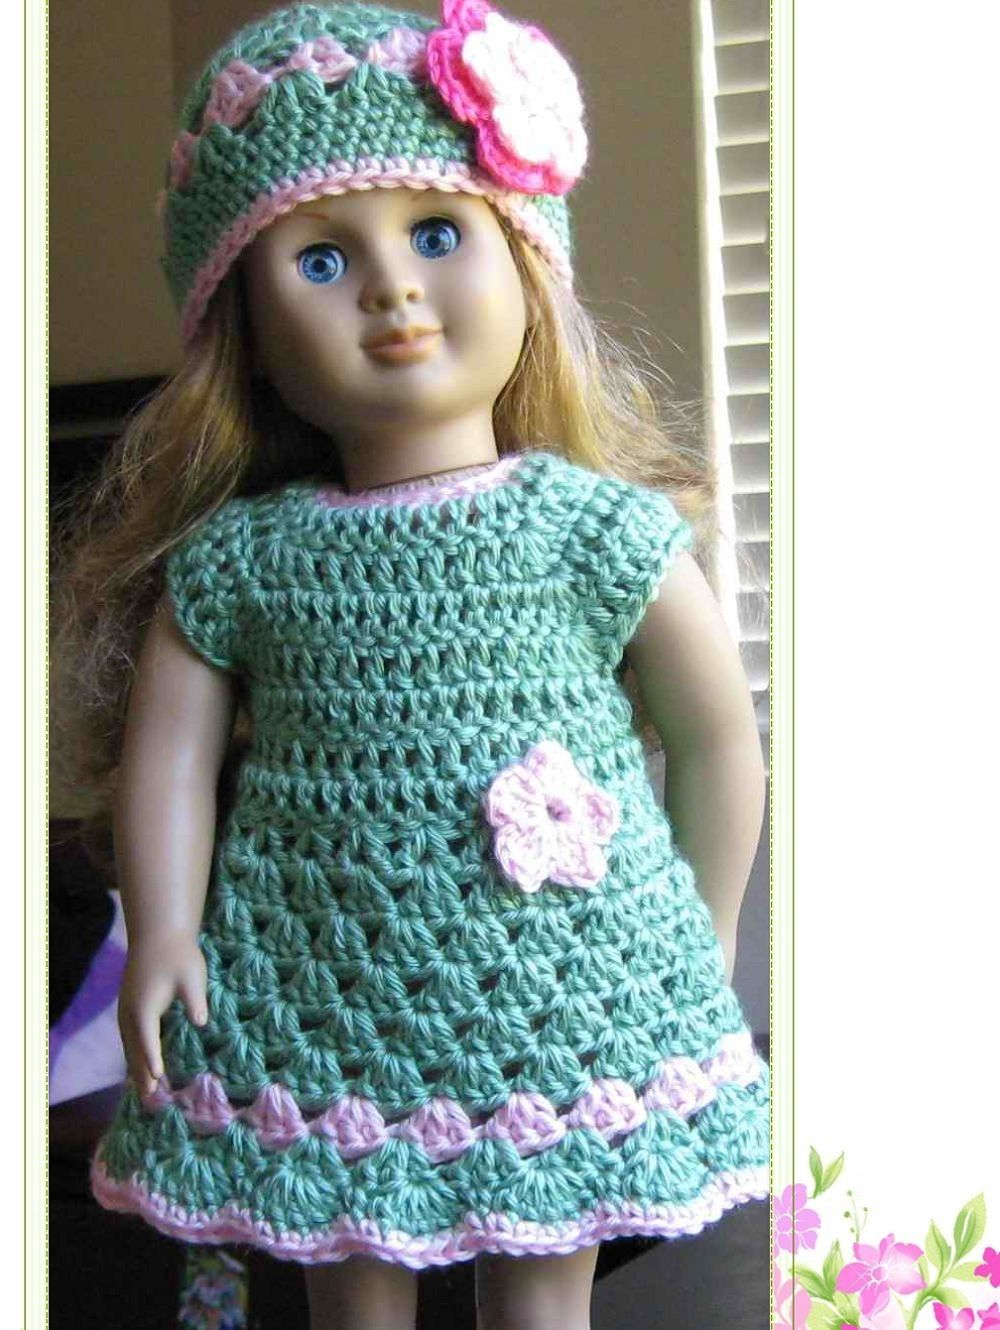 Crochet Doll Dress Patterns For Barbies Barbie Doll Clothes Patterns Free Crochet Patterns Barbie Doll